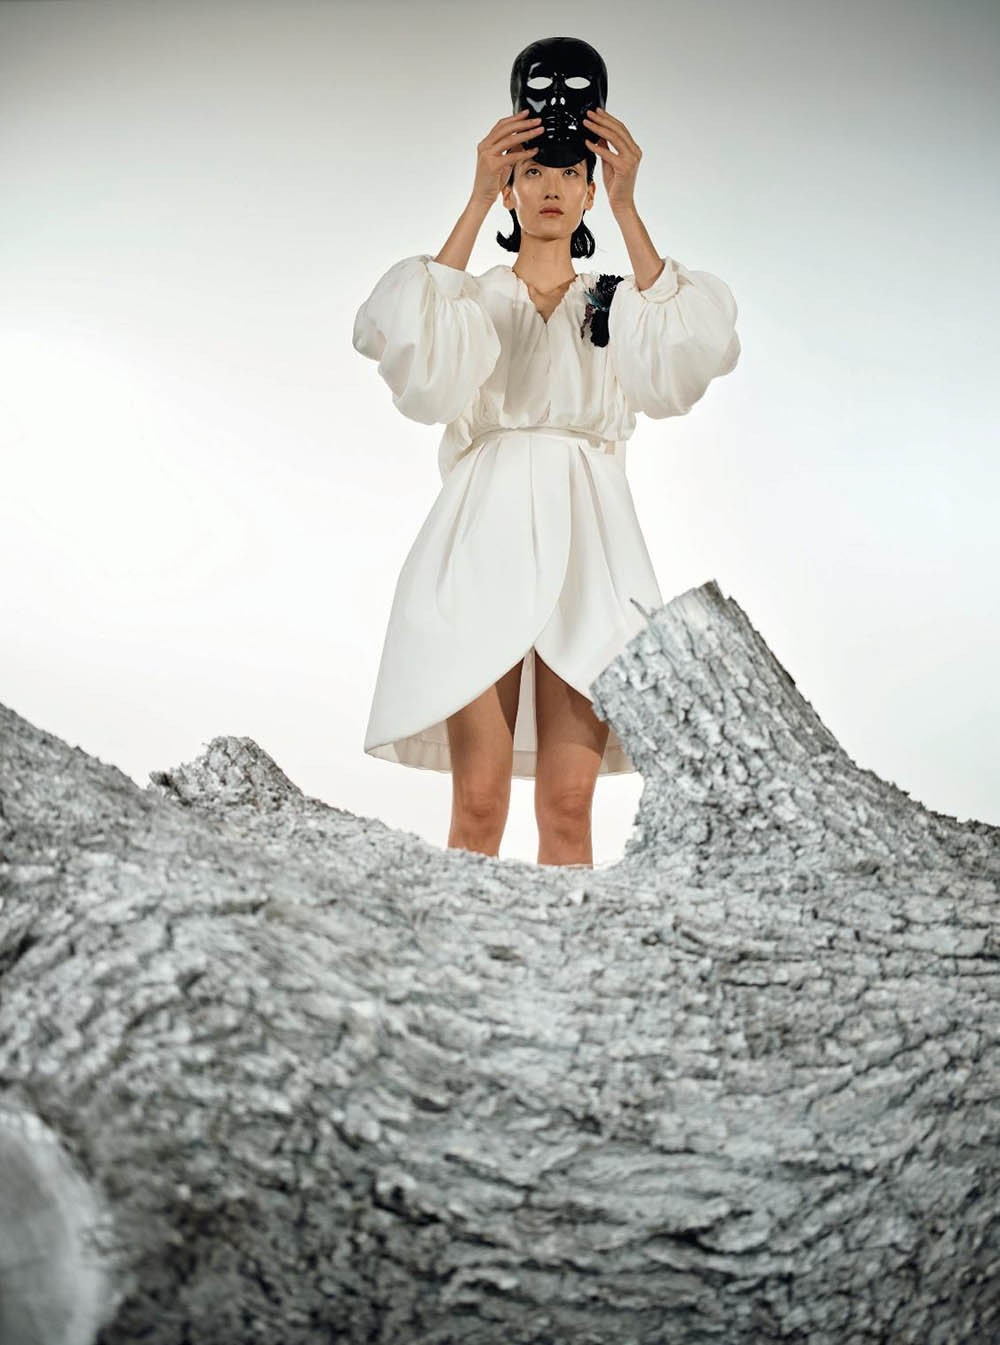 Lina Zhang by Kacper Kasprzyk for Numéro March 2020